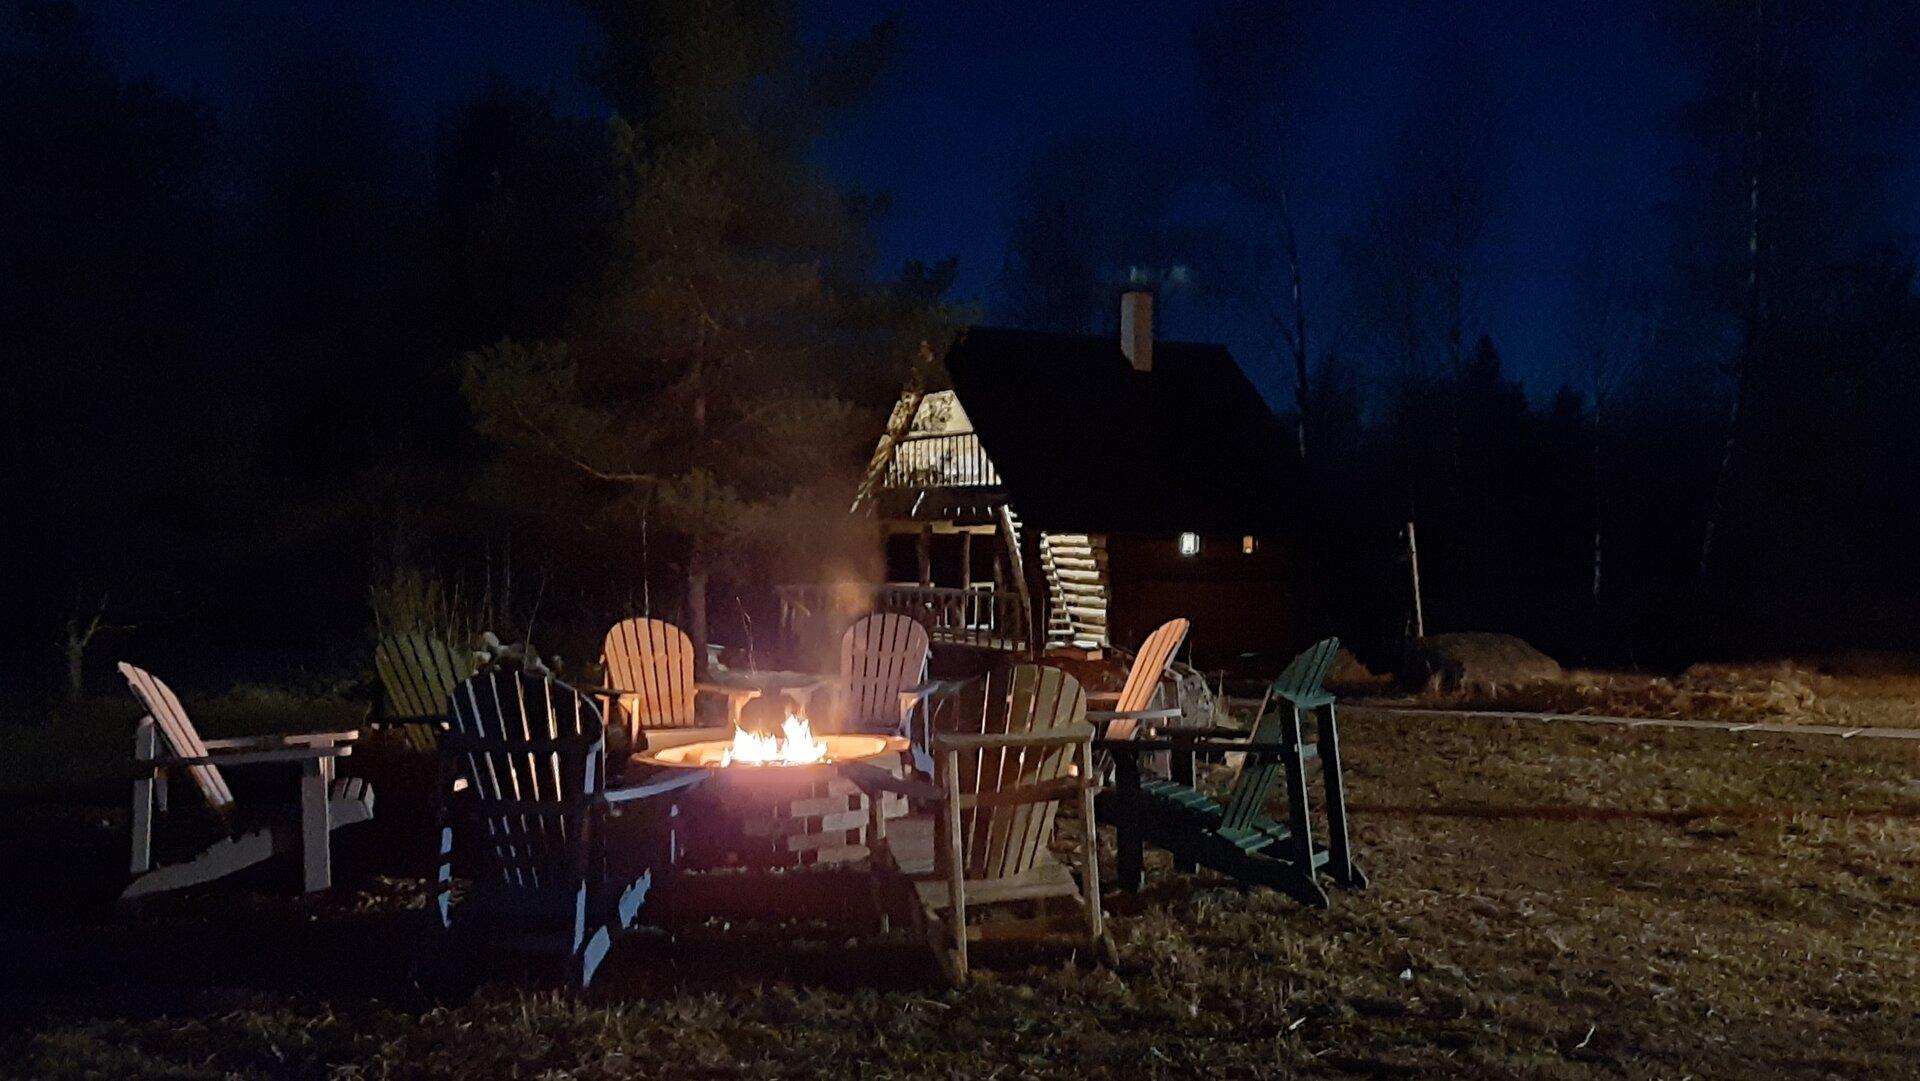 Raistiko Holiday Farm, campfire pit